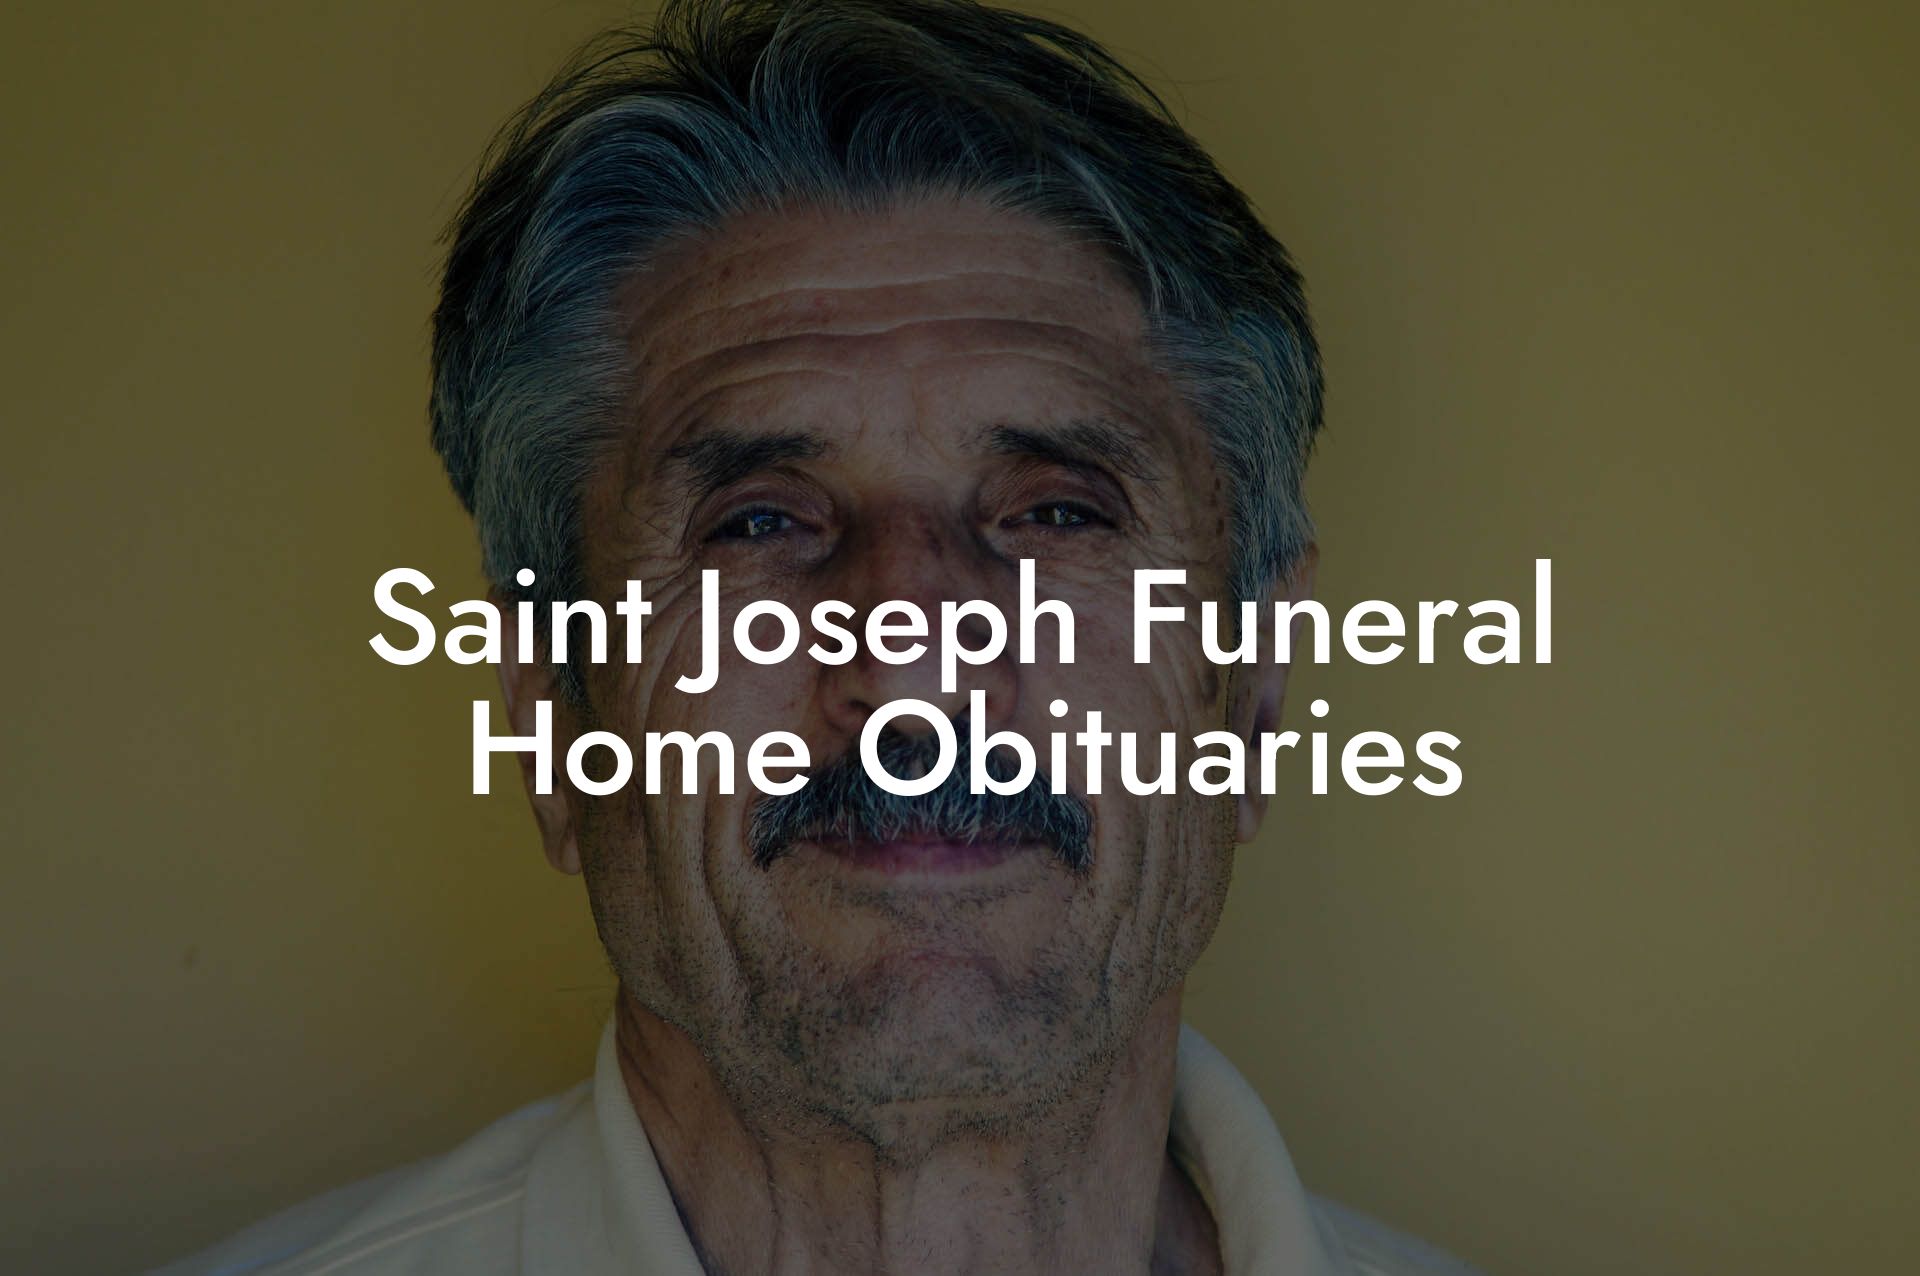 Saint Joseph Funeral Home Obituaries